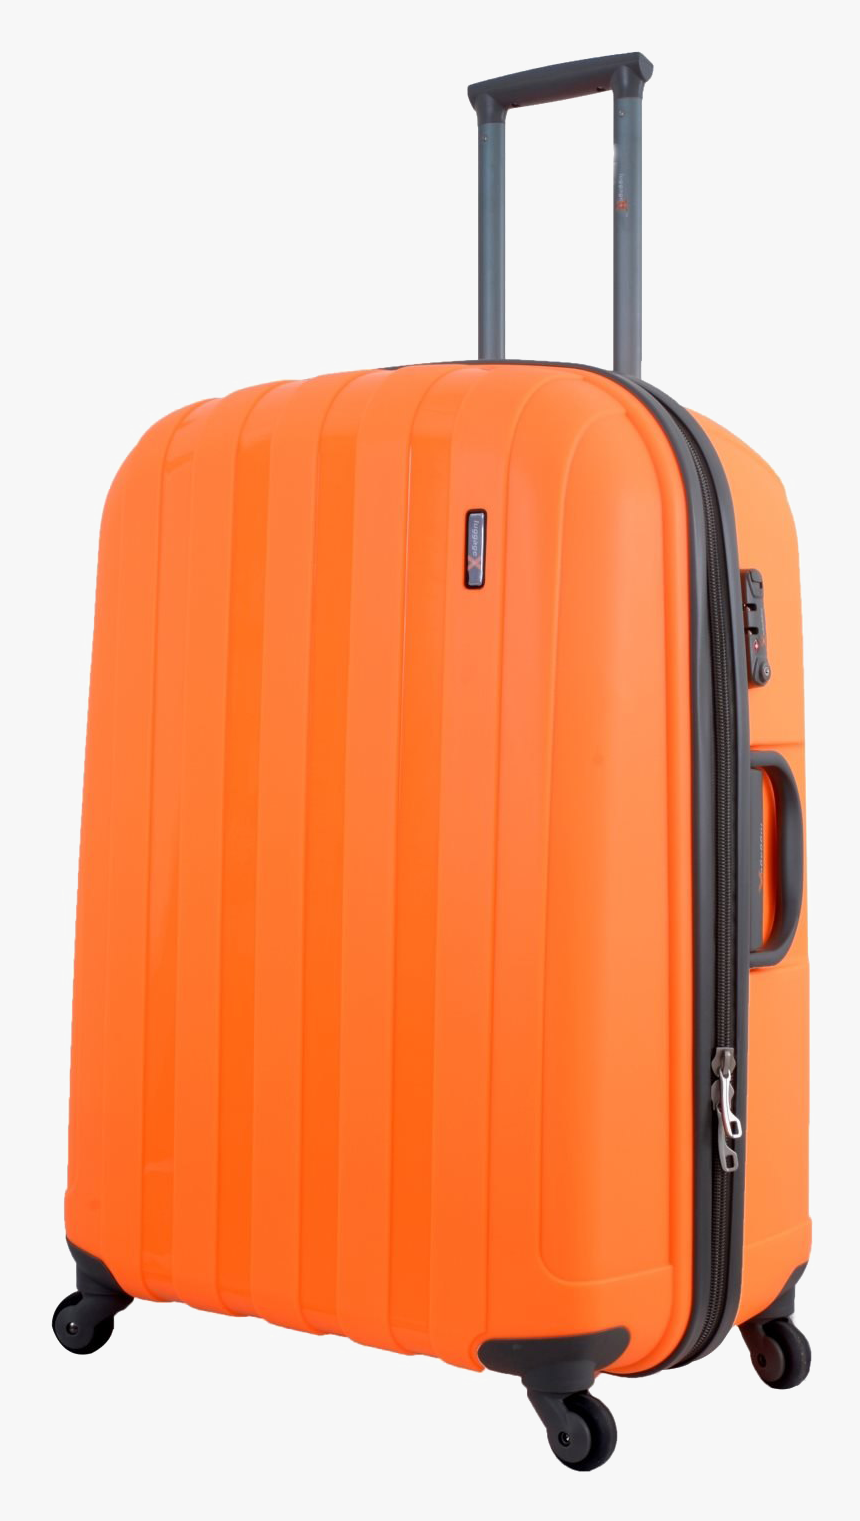 Suitcase Png Image Transparent Background - Transparent Background Suitcase Png, Png Download, Free Download